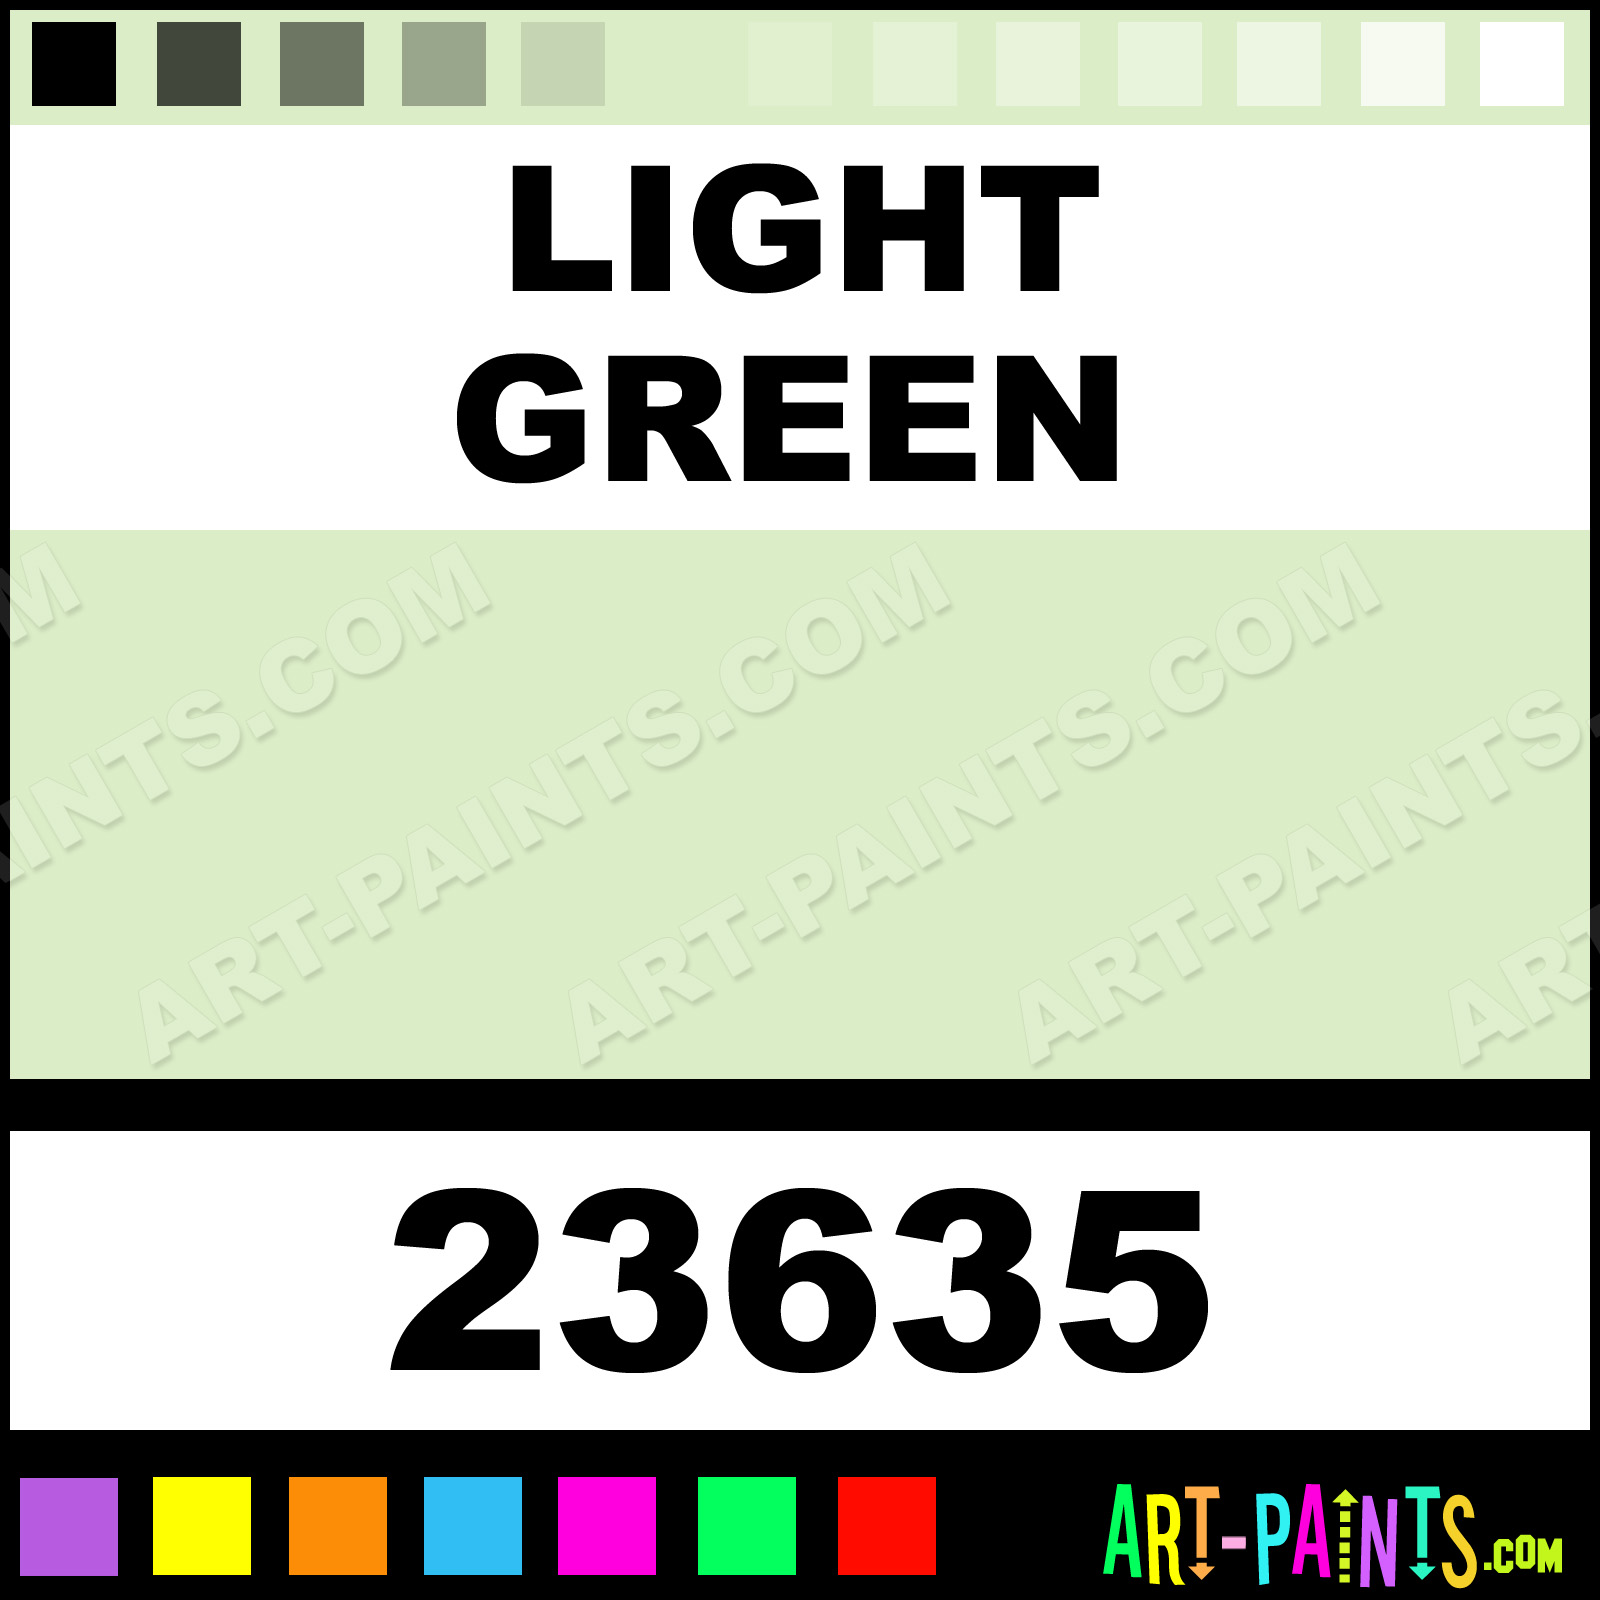 Light Green Craft Smart Acrylic Paints - 23635 - Light Green Paint, Light Green  Color, Michaels Craft Smart Paint, DBEDC7 